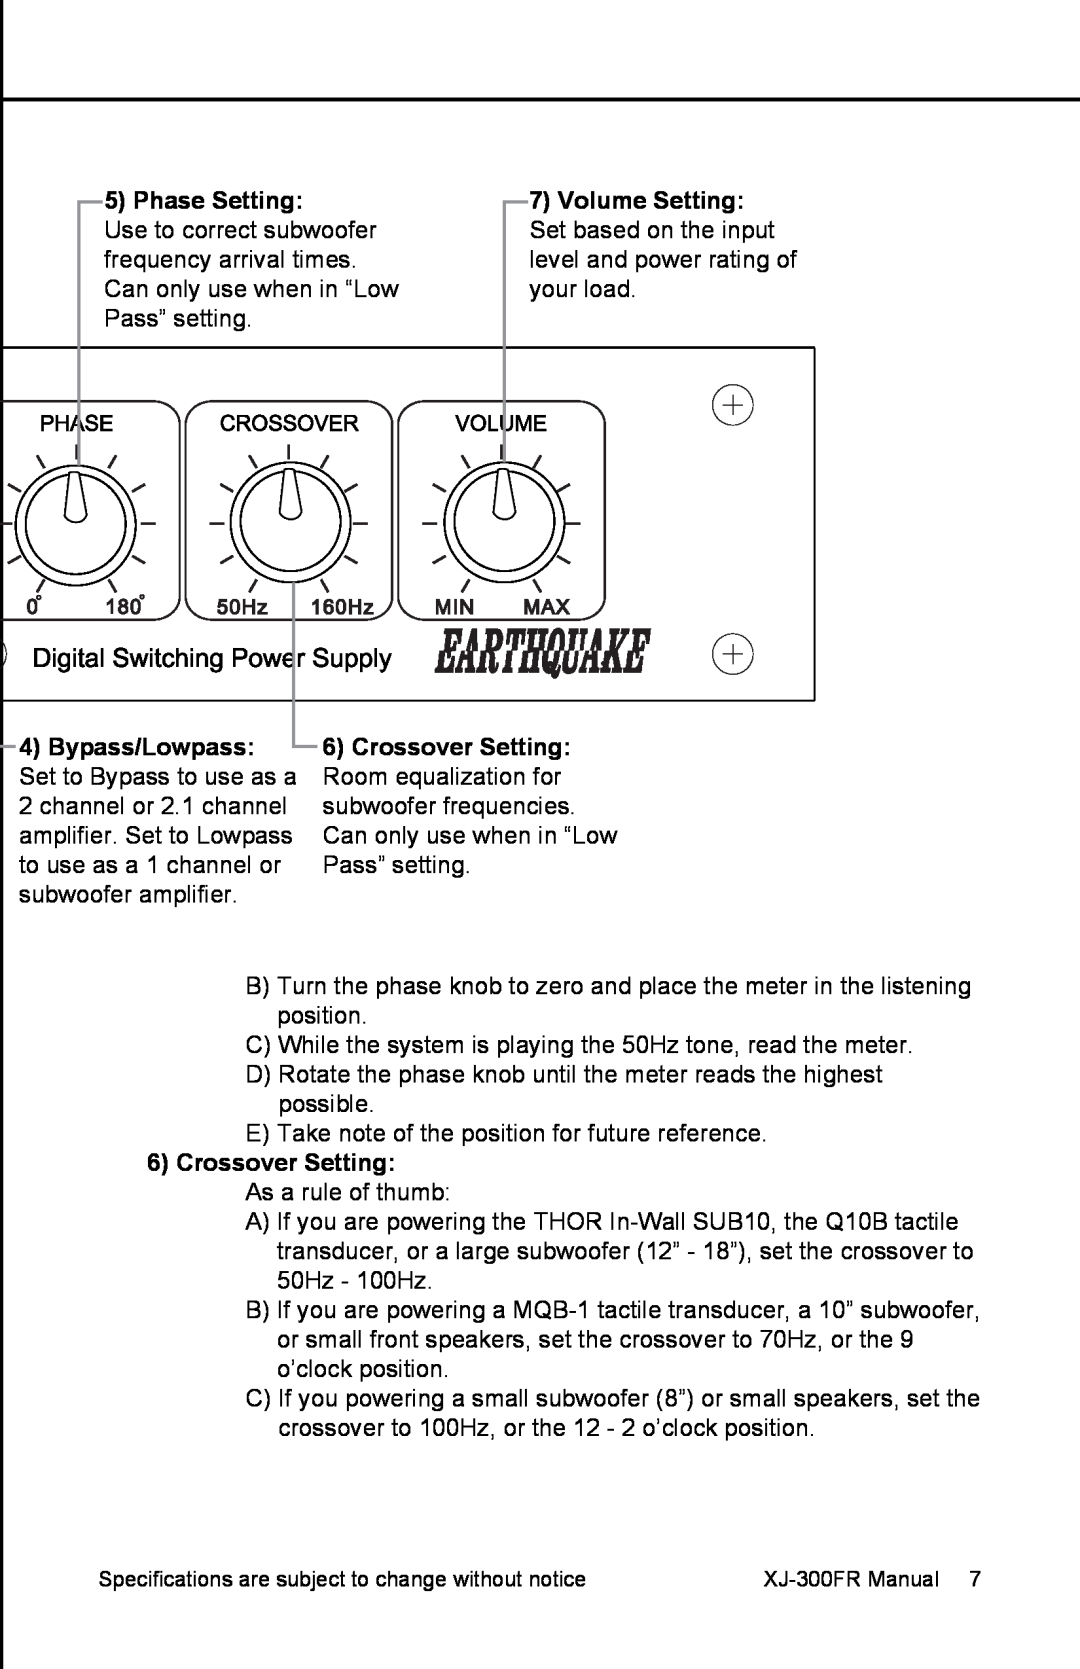 Earthquake Sound XJ-300 FR user manual Phase Setting, 7Volume Setting, 6Crossover Setting 